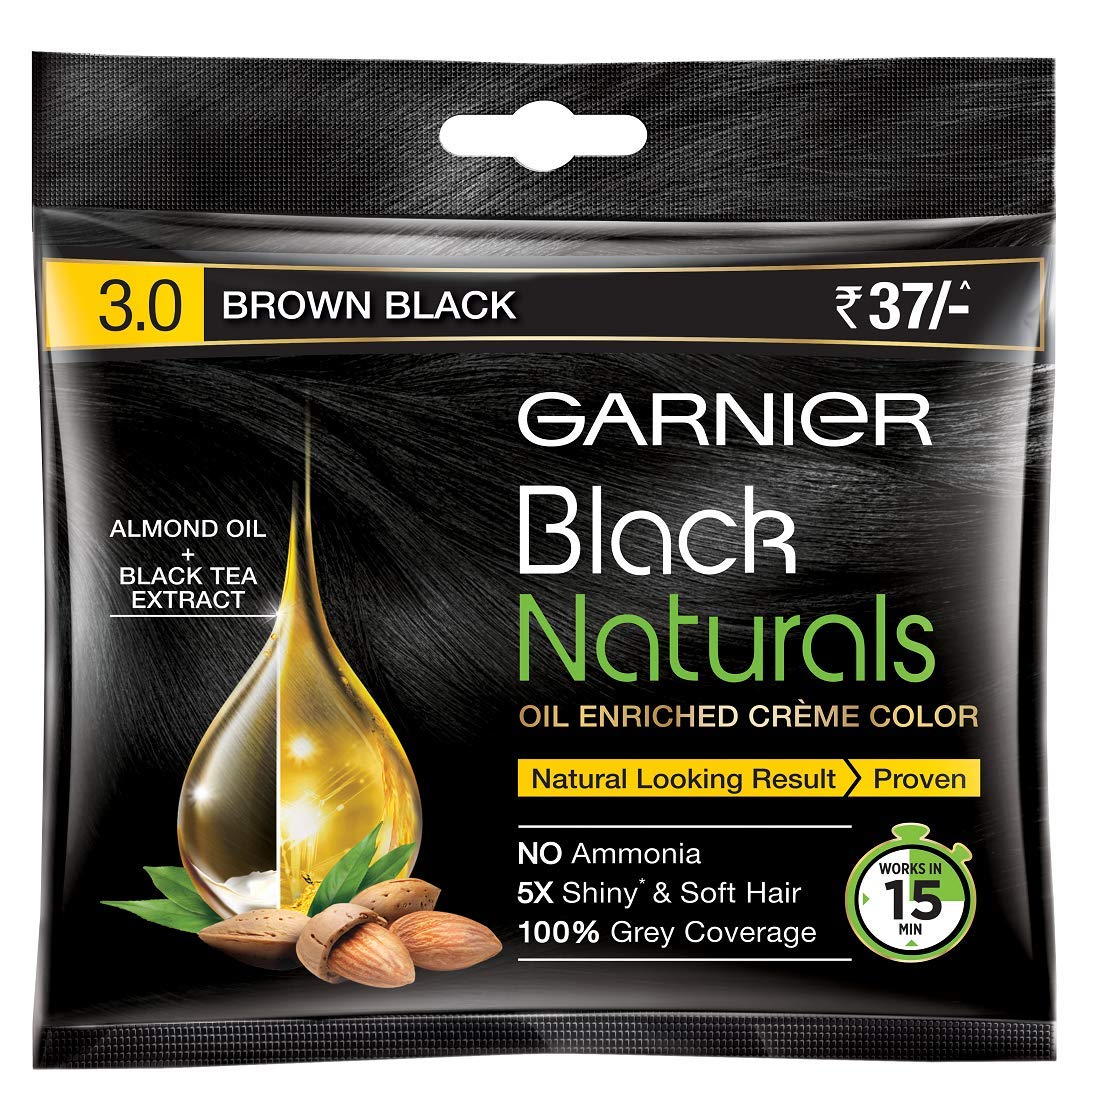 Garnier Black Naturals Hair Color Brown Black 3.0 (20ml+20gm)